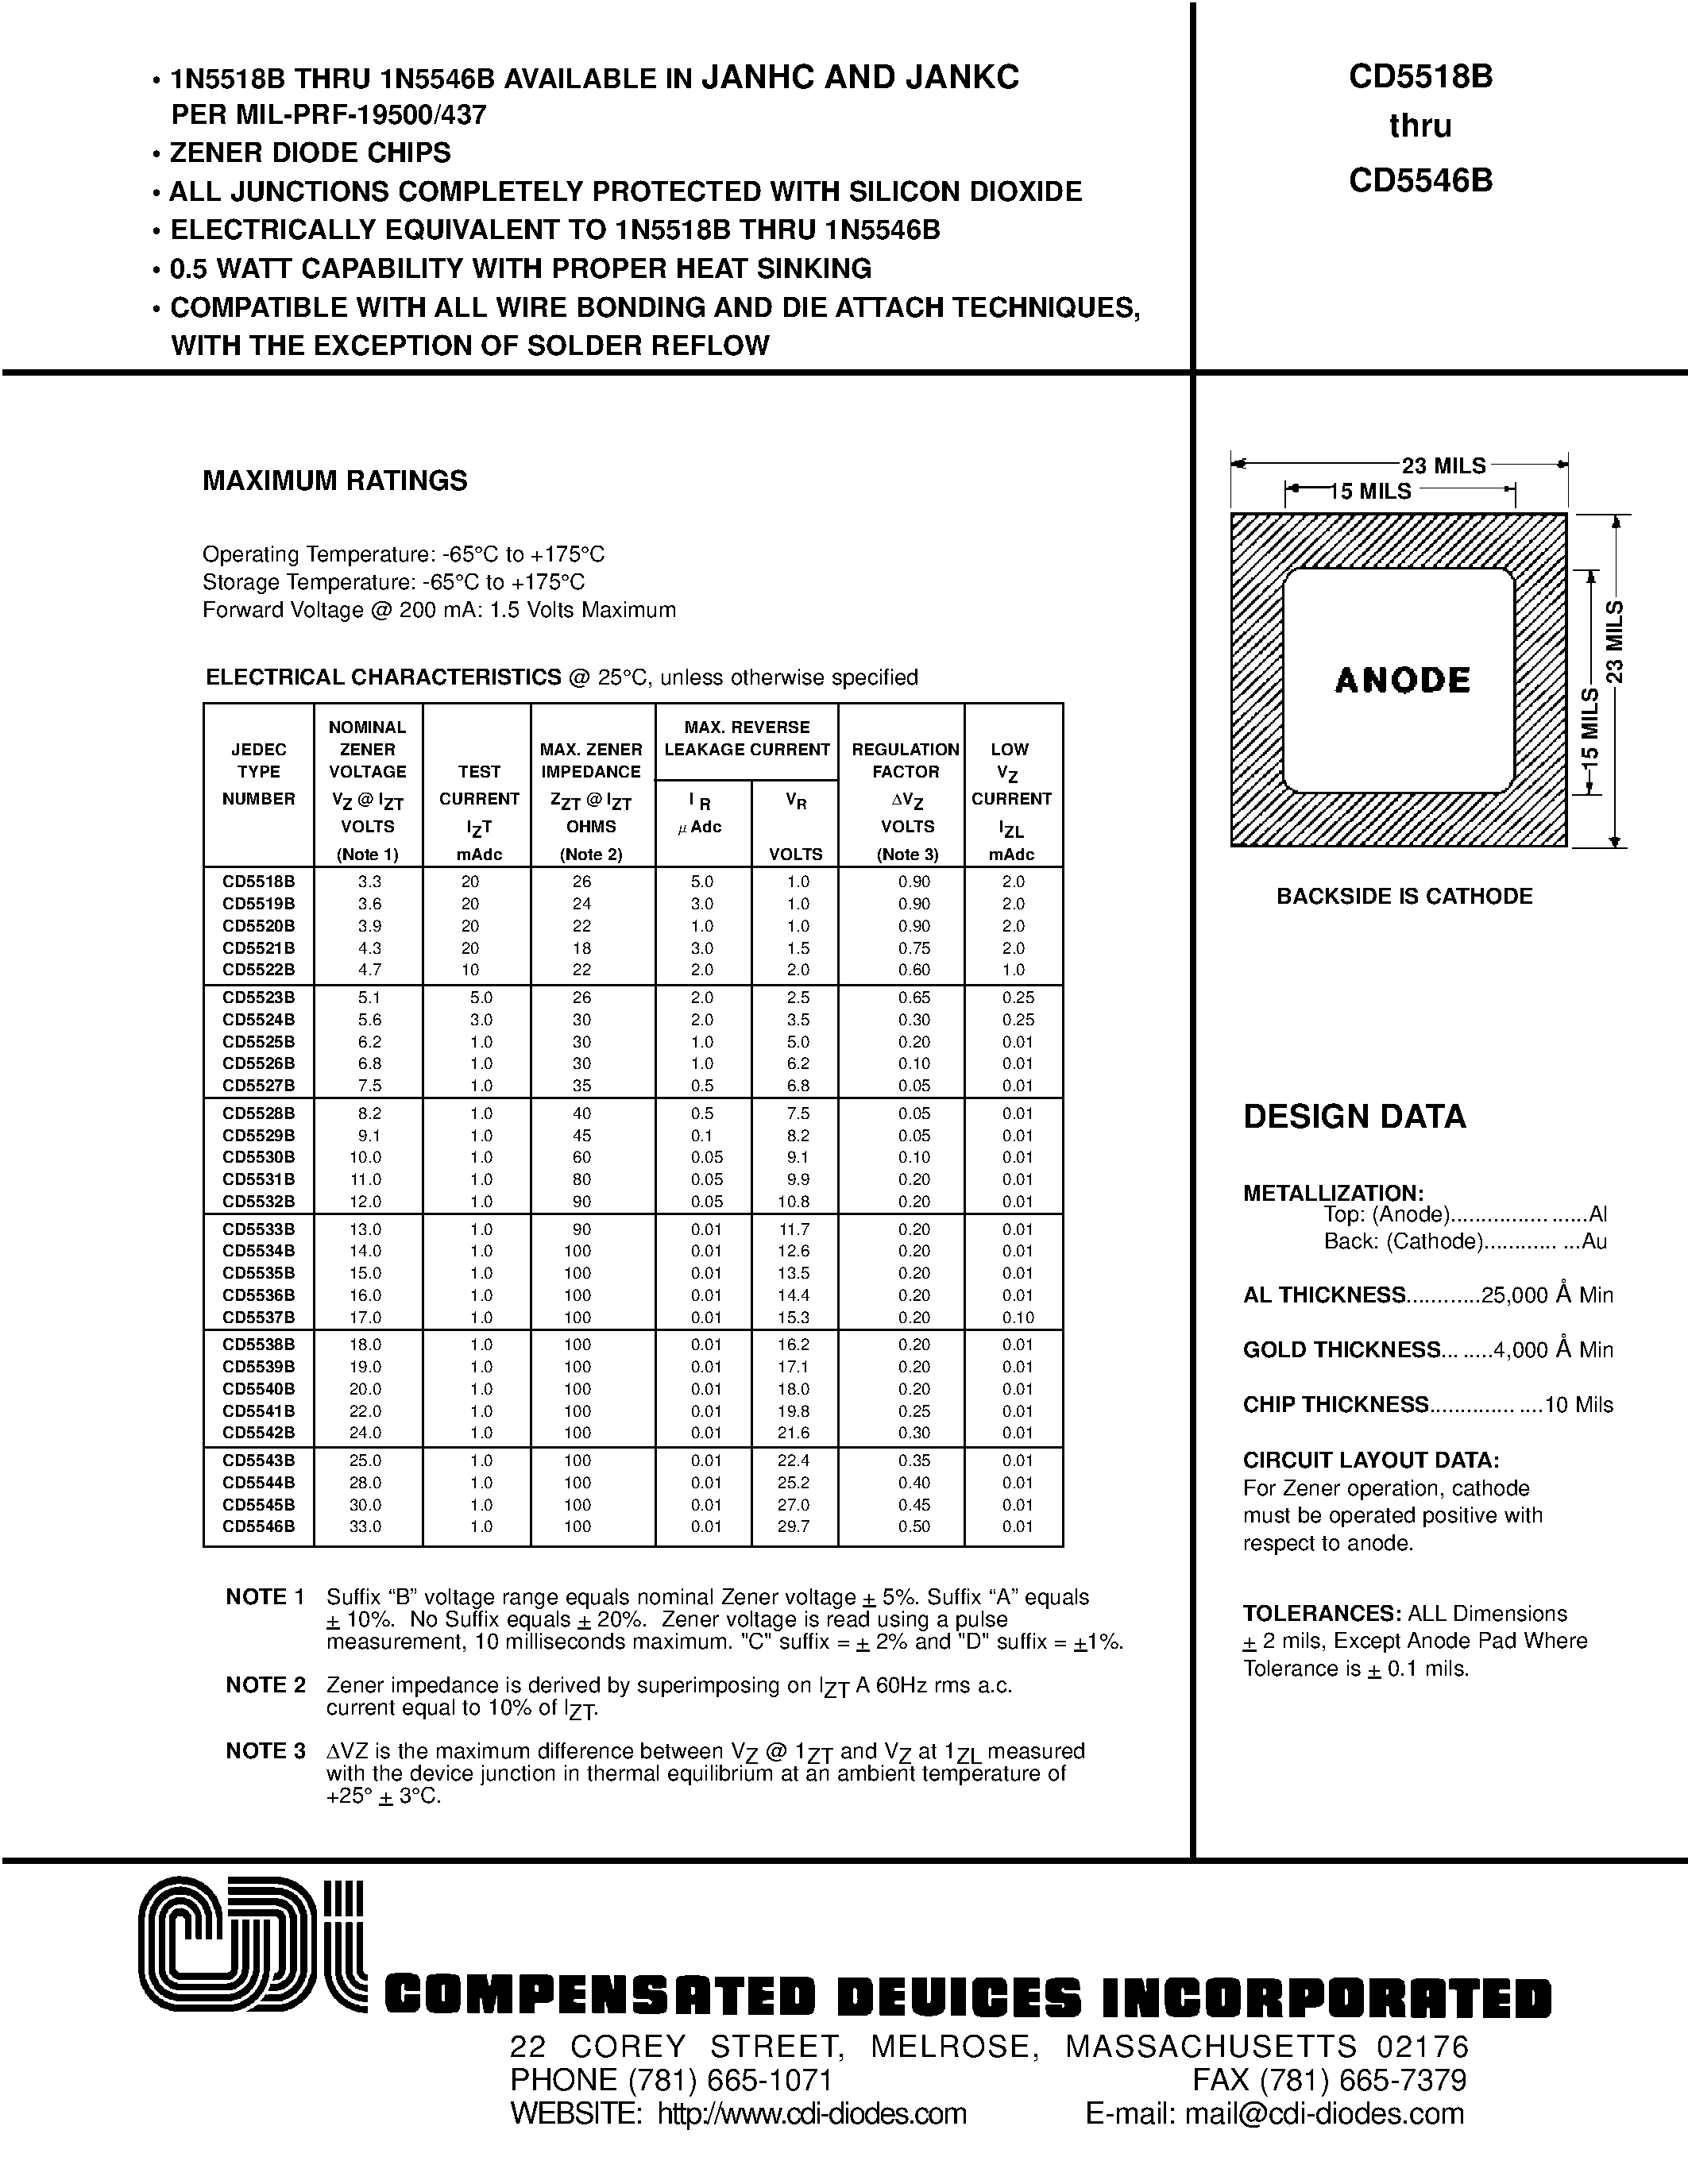 Datasheet CD5542B - ZENER DIODE CHIPS page 1